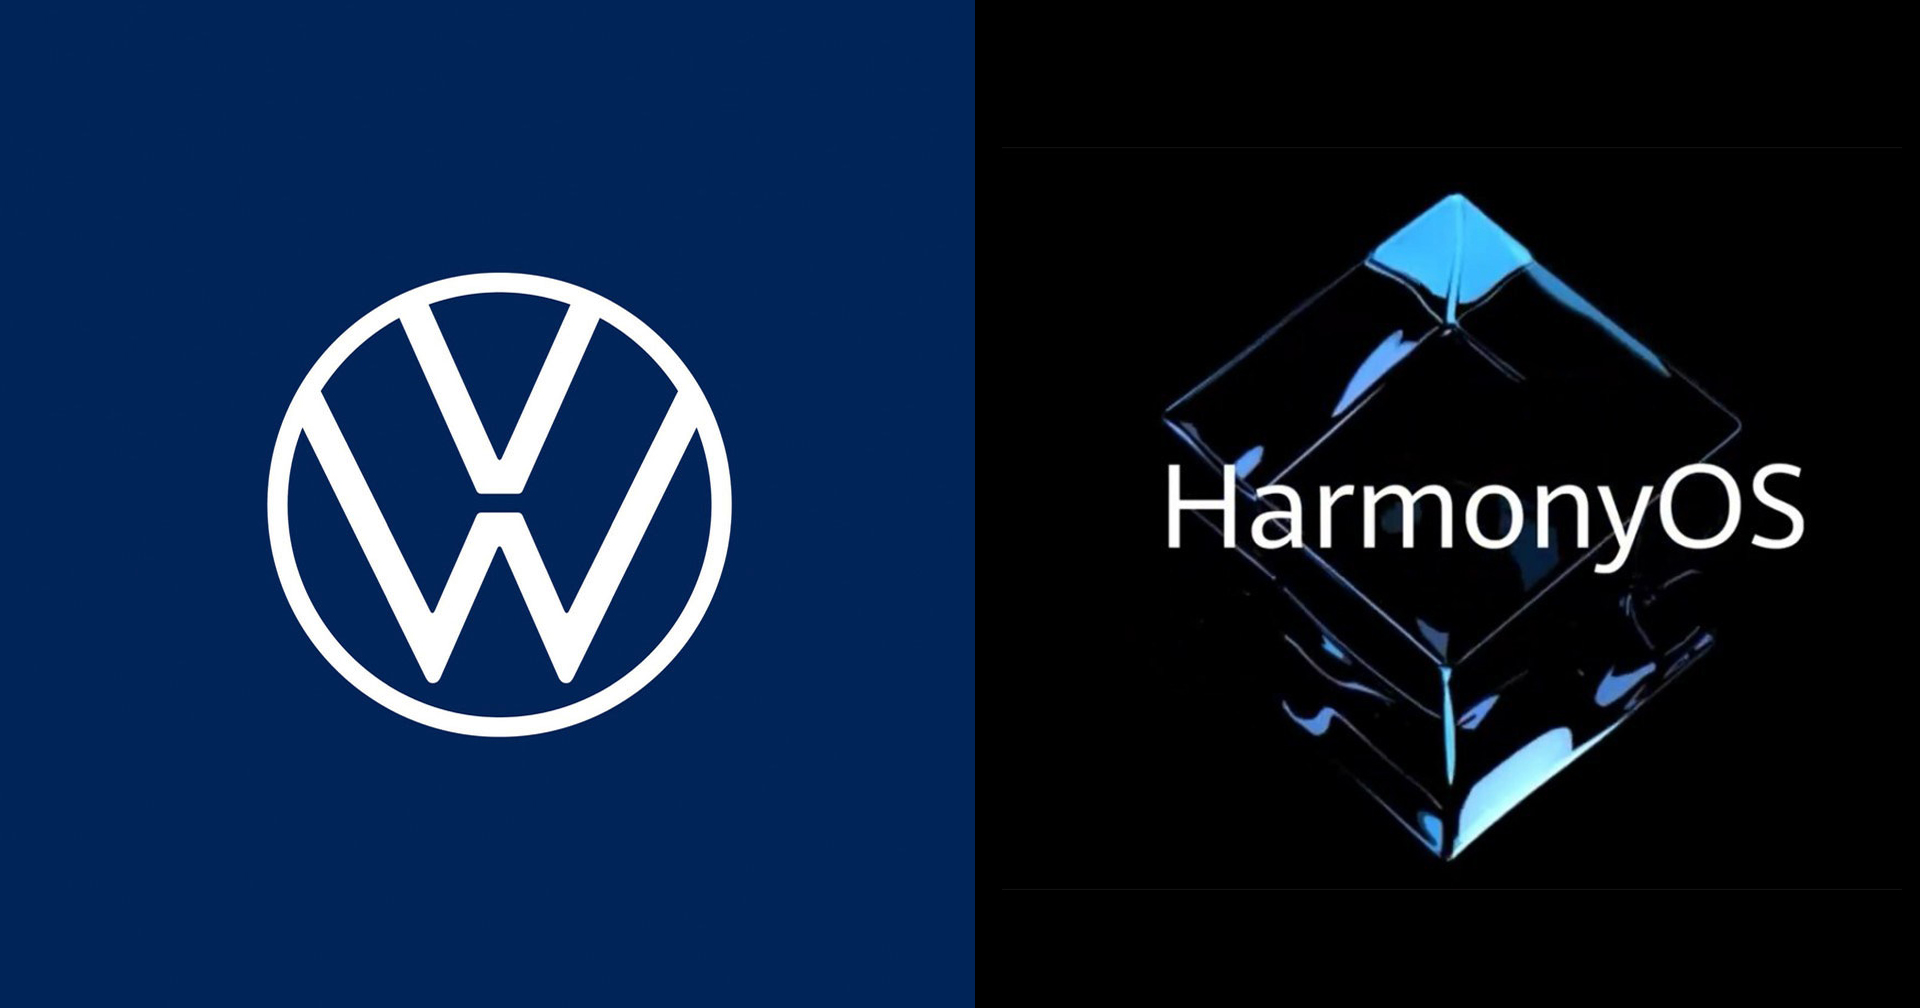 Volkswagen เจรจากับ Huawei นำ HarmonyOS ติดตั้งในรถยนต์ที่จำหน่ายในจีน